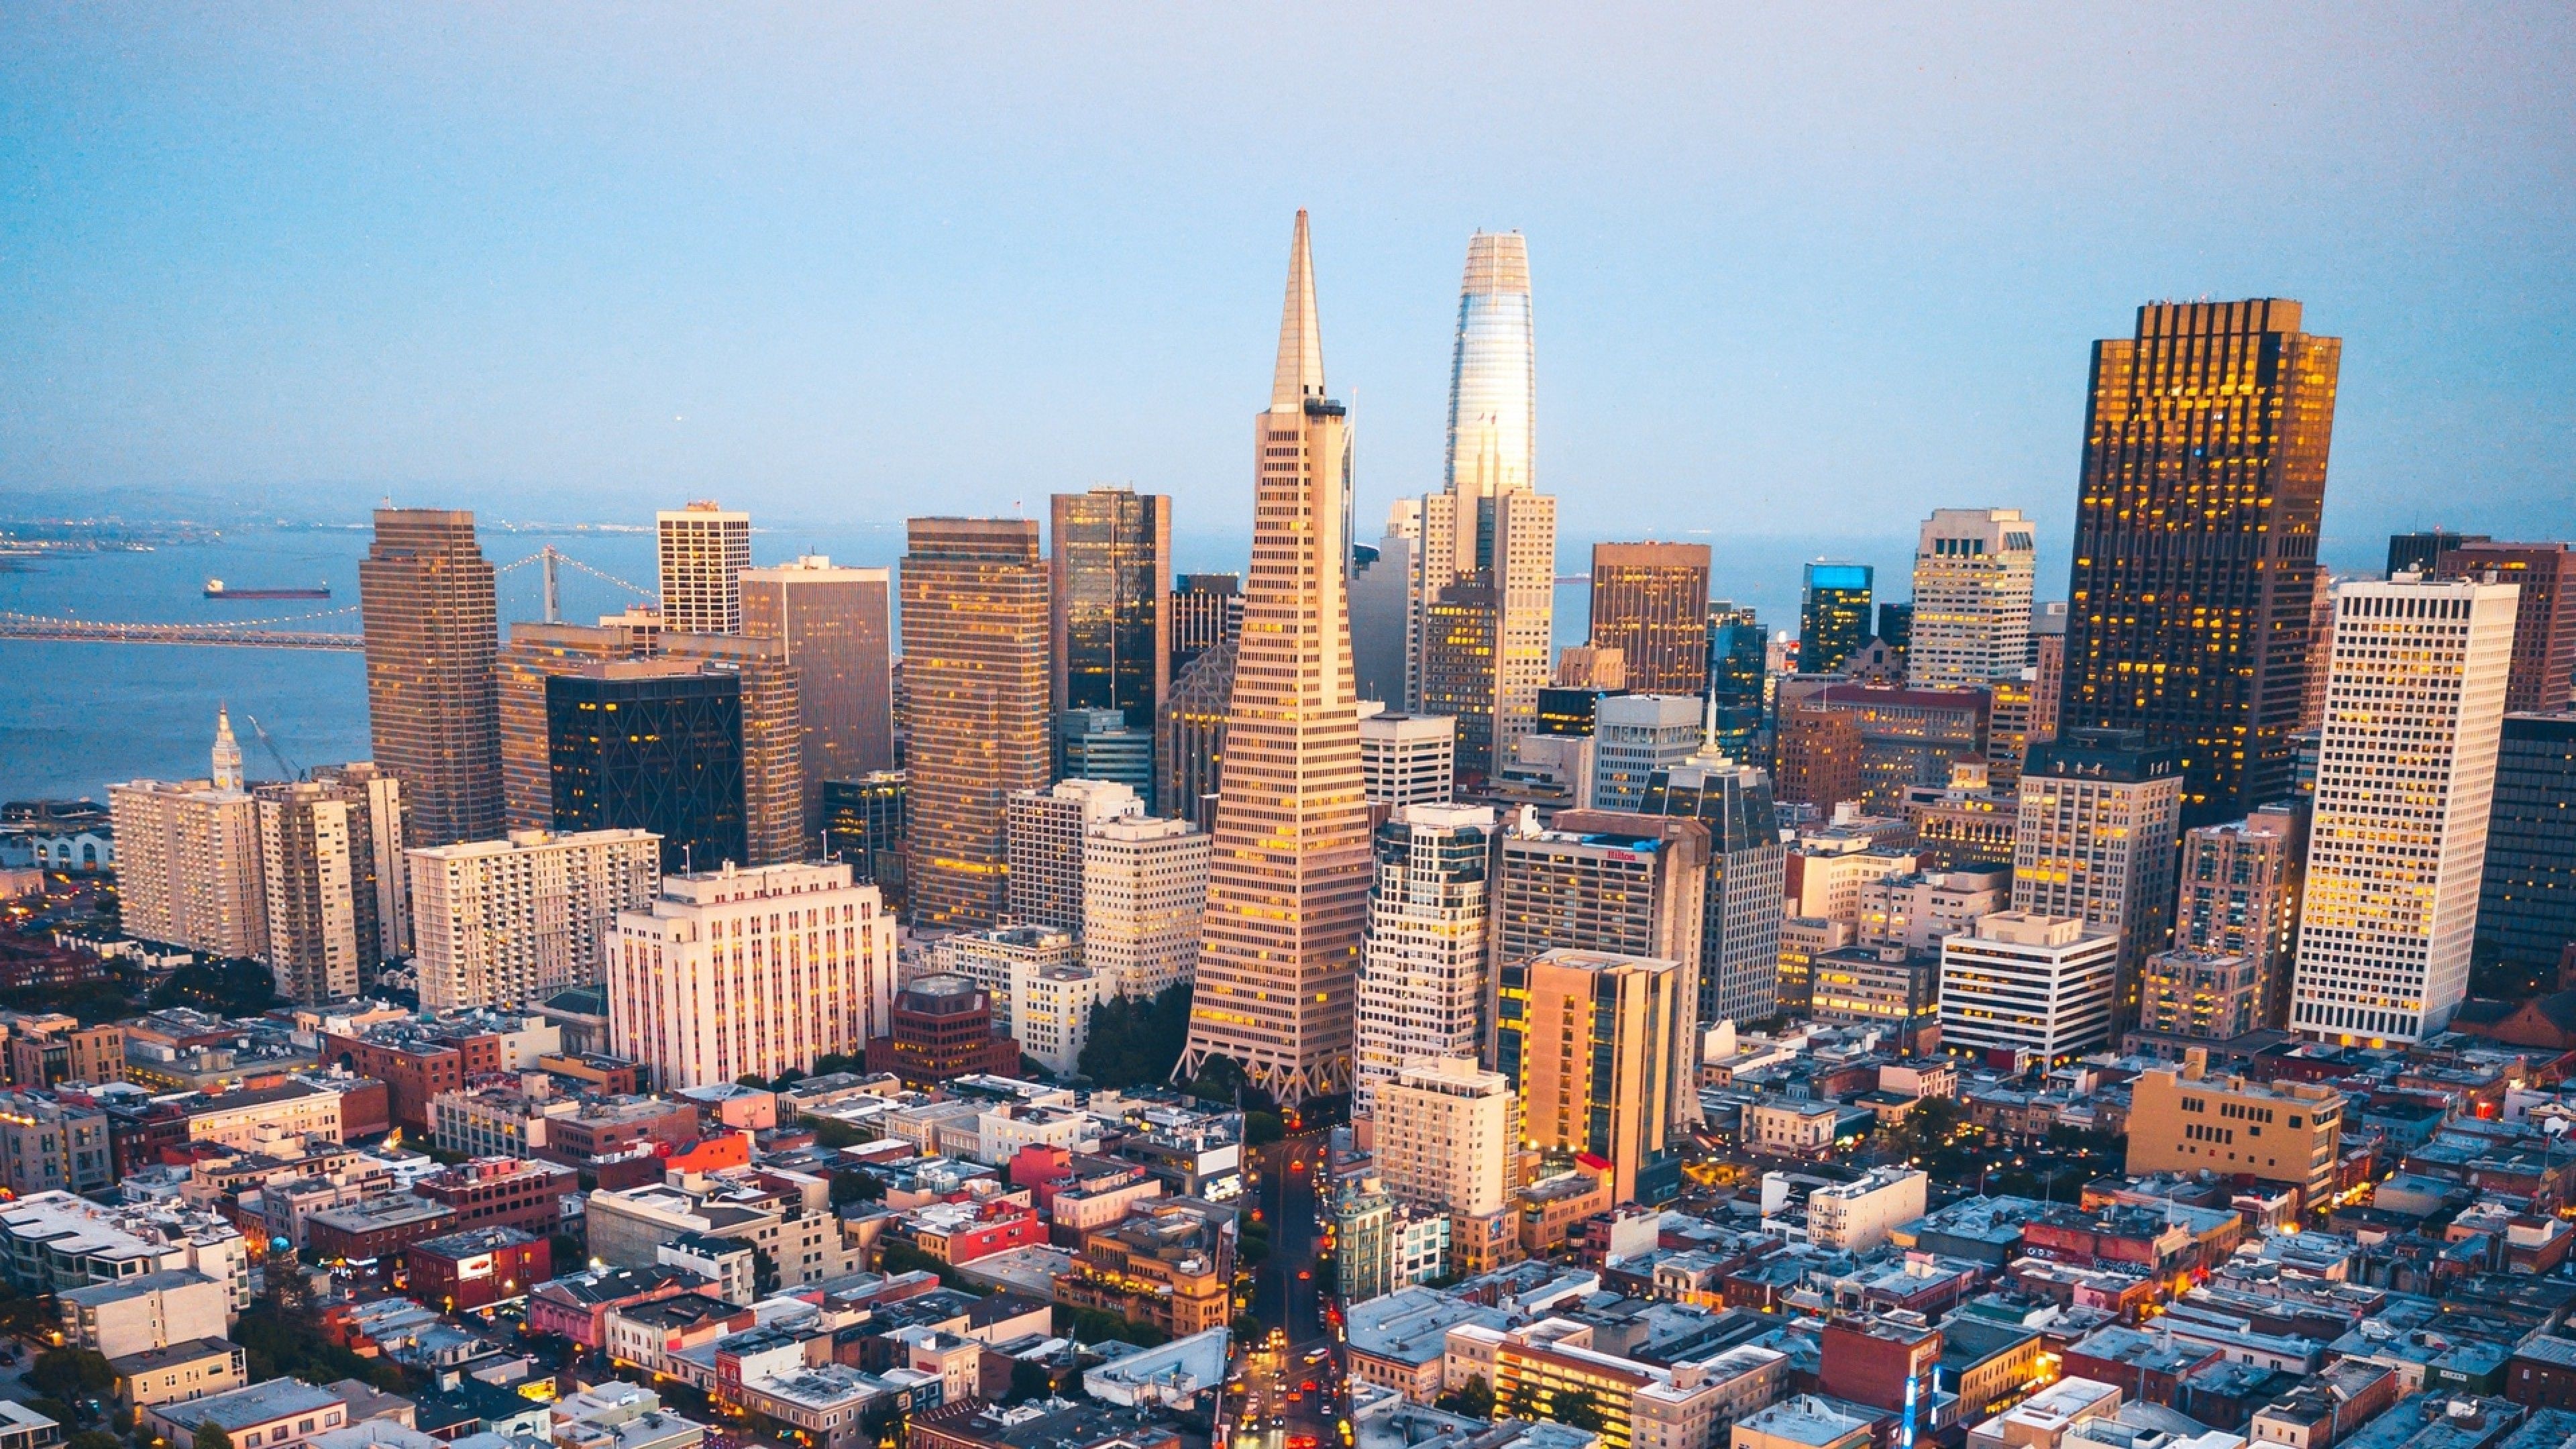 San Francisco: Transamerica Pyramid, Financial District. 3840x2160 4K Wallpaper.